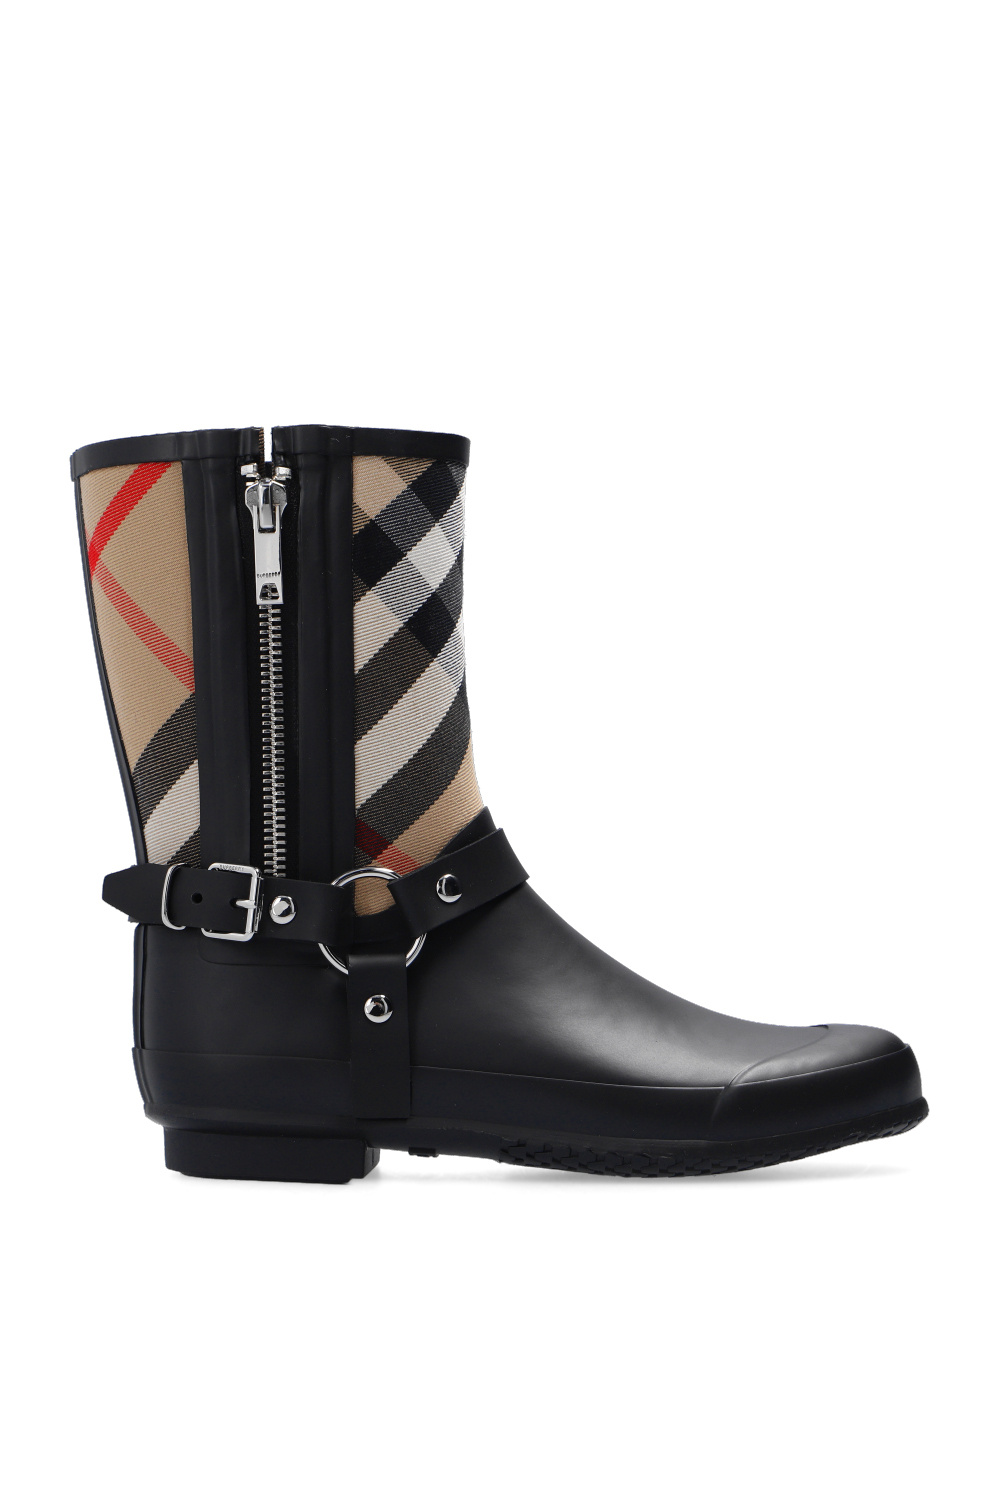 Burberry ‘House Check’ rain boots